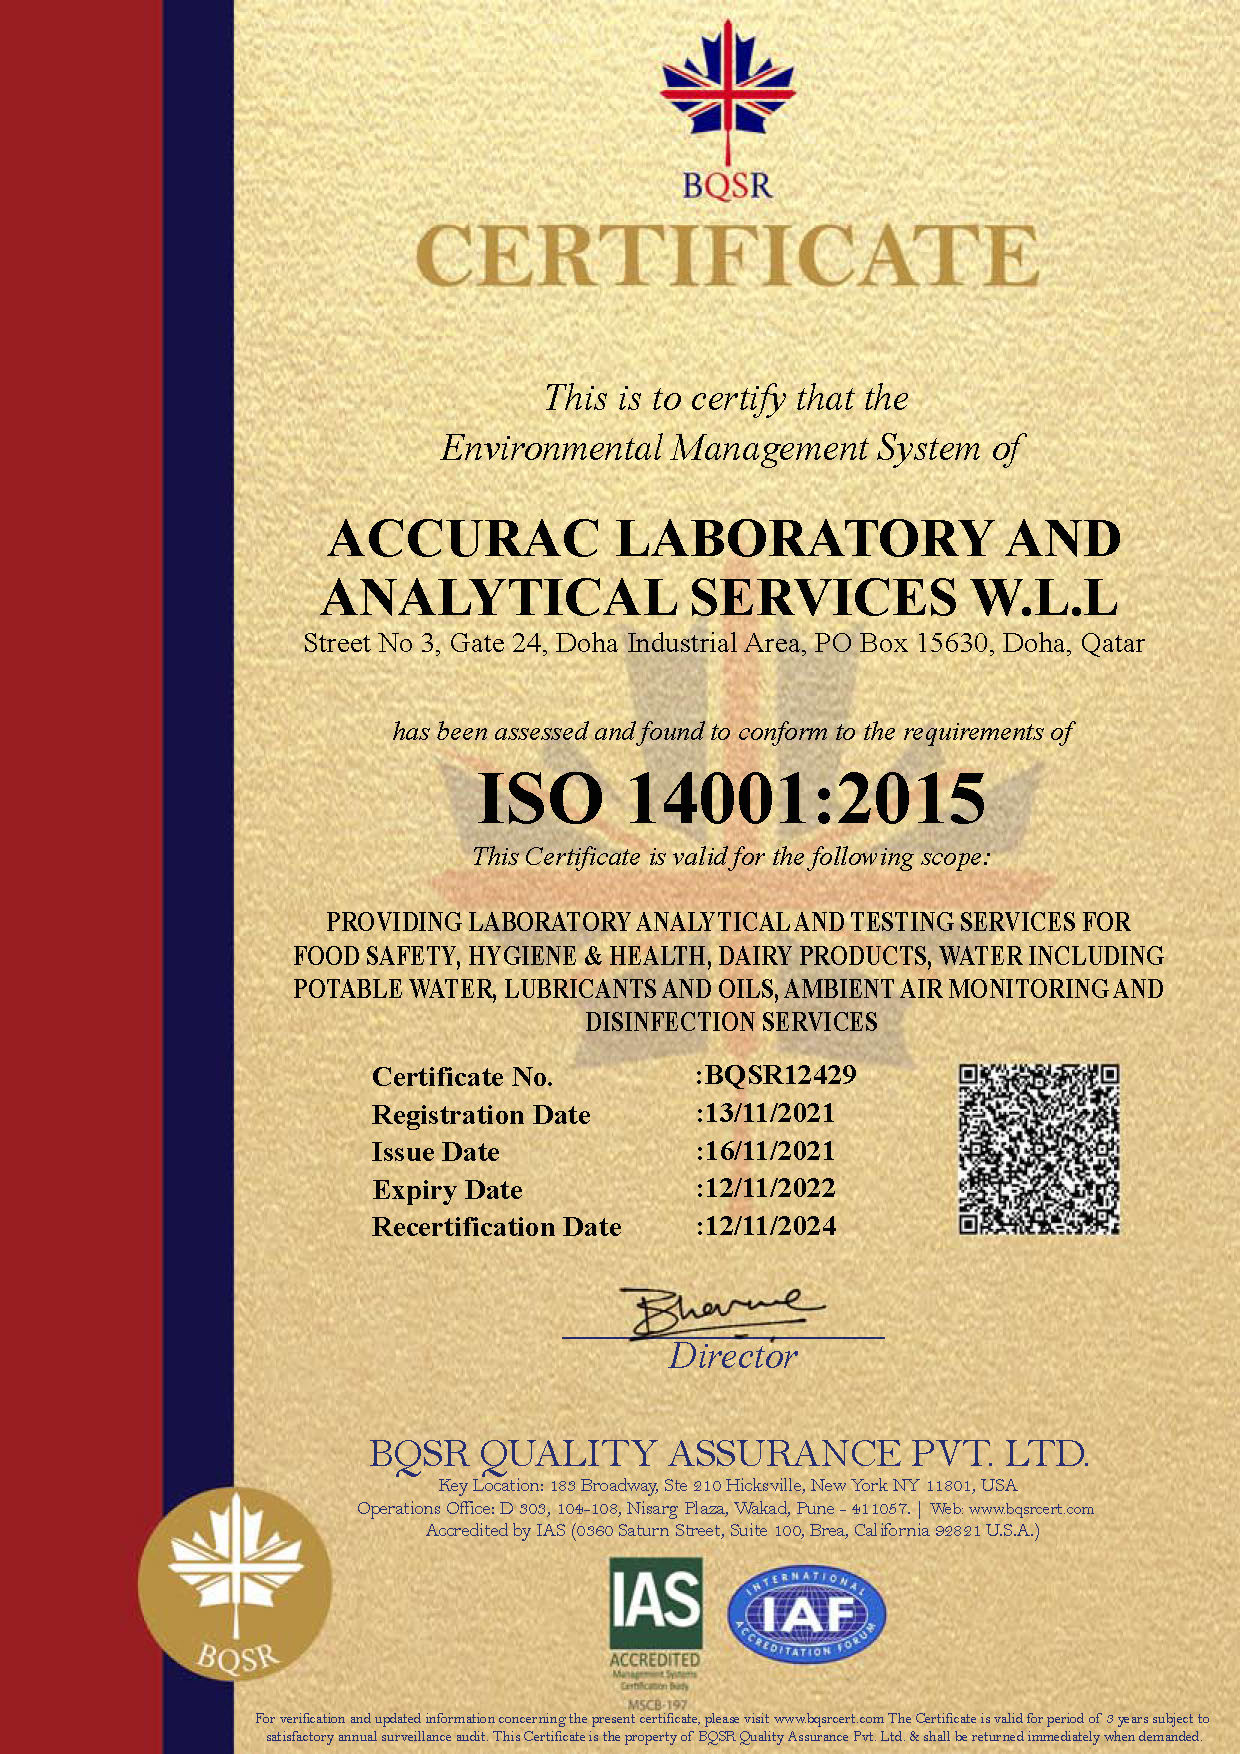 ISO 14001:2015 Accreditation 2021 to 2024- Accurac Laboratory